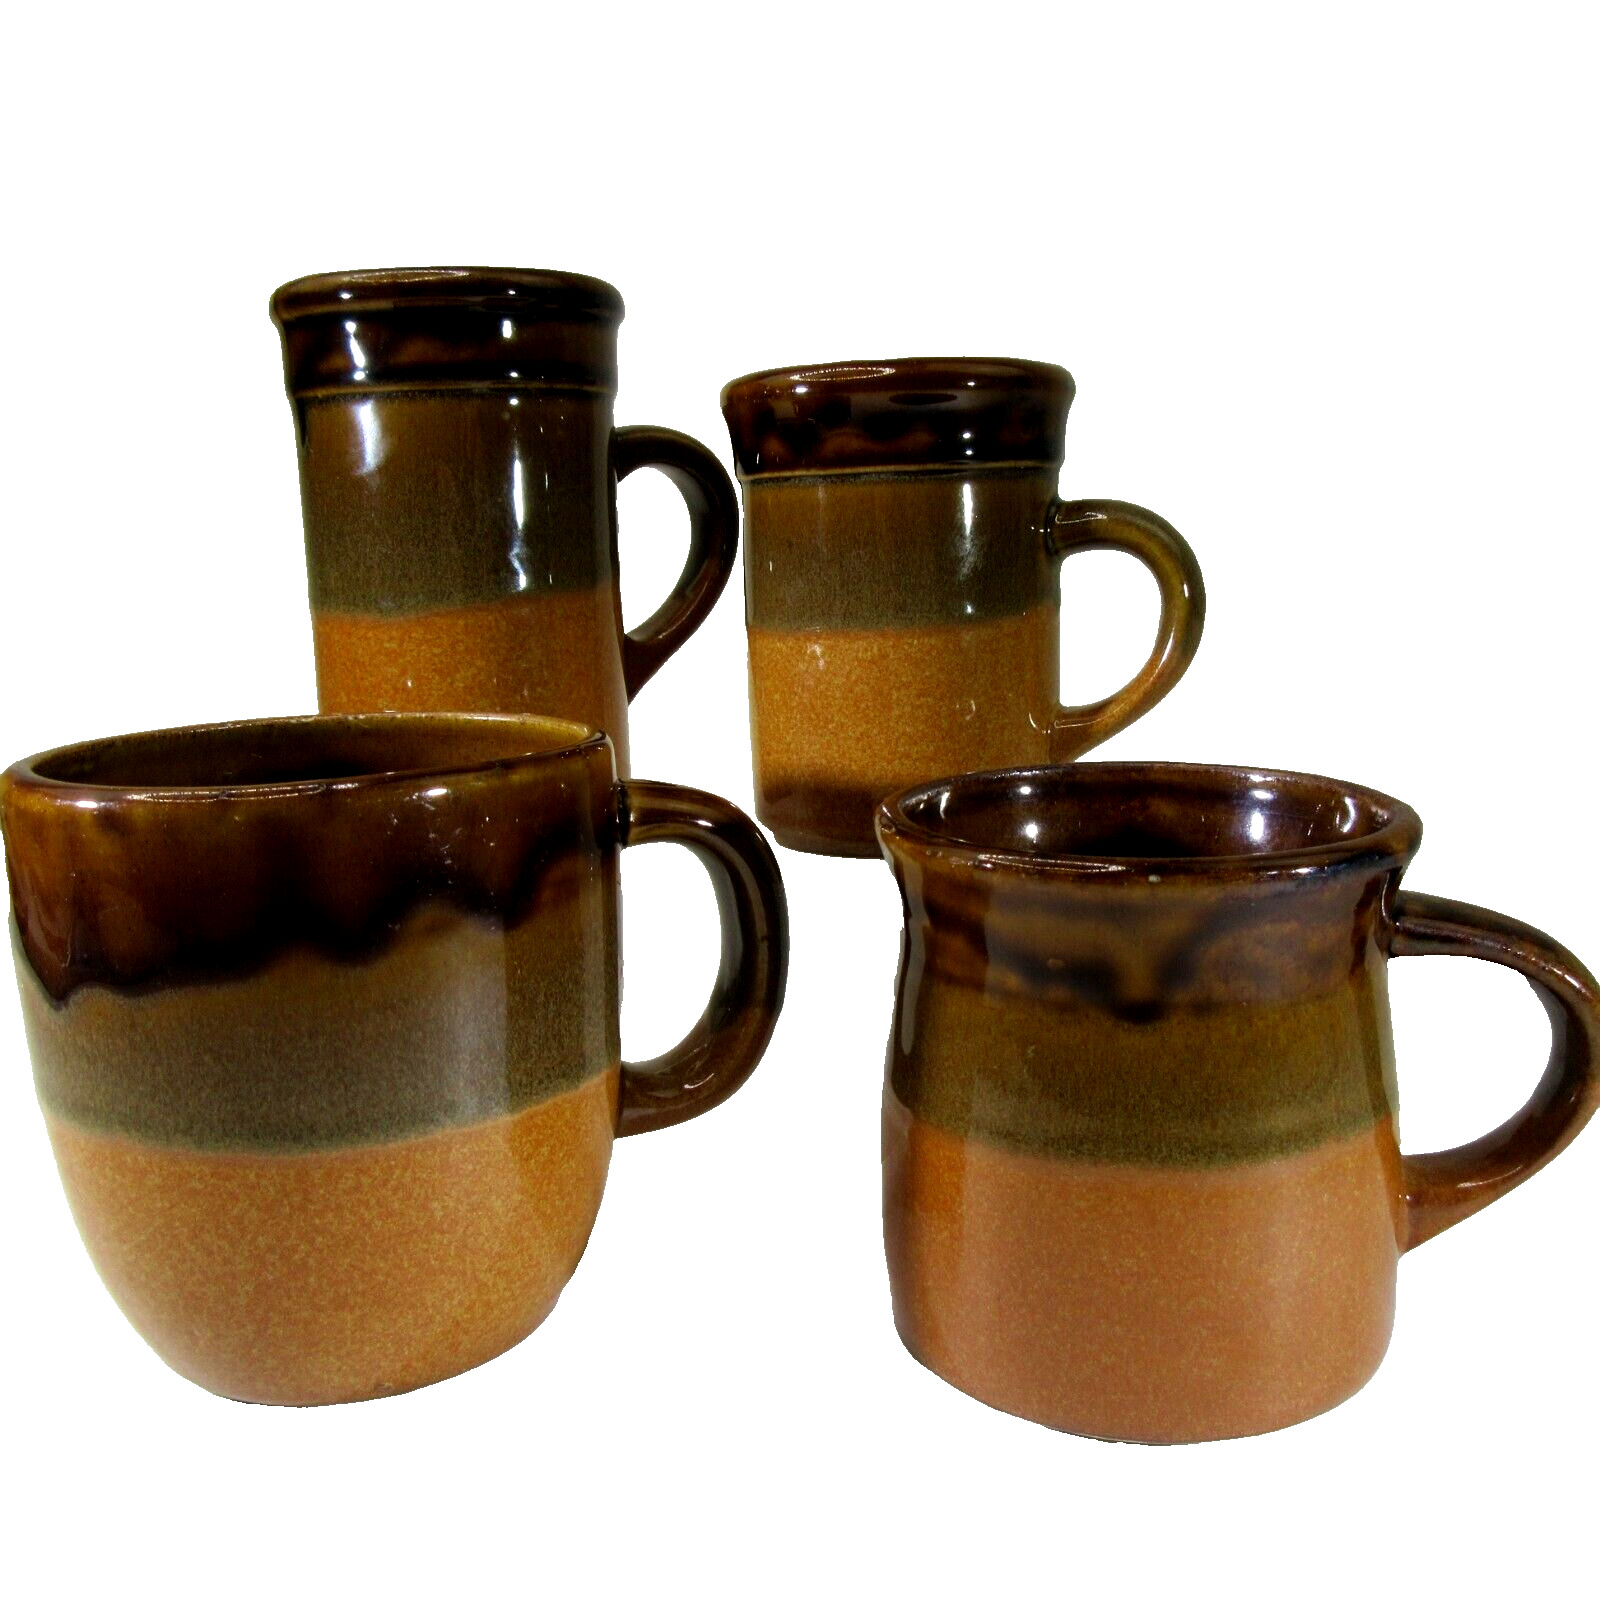 4 BERKSHIRE Stoneware Pottery MUGS brown orange drip glaze vintage 70's England